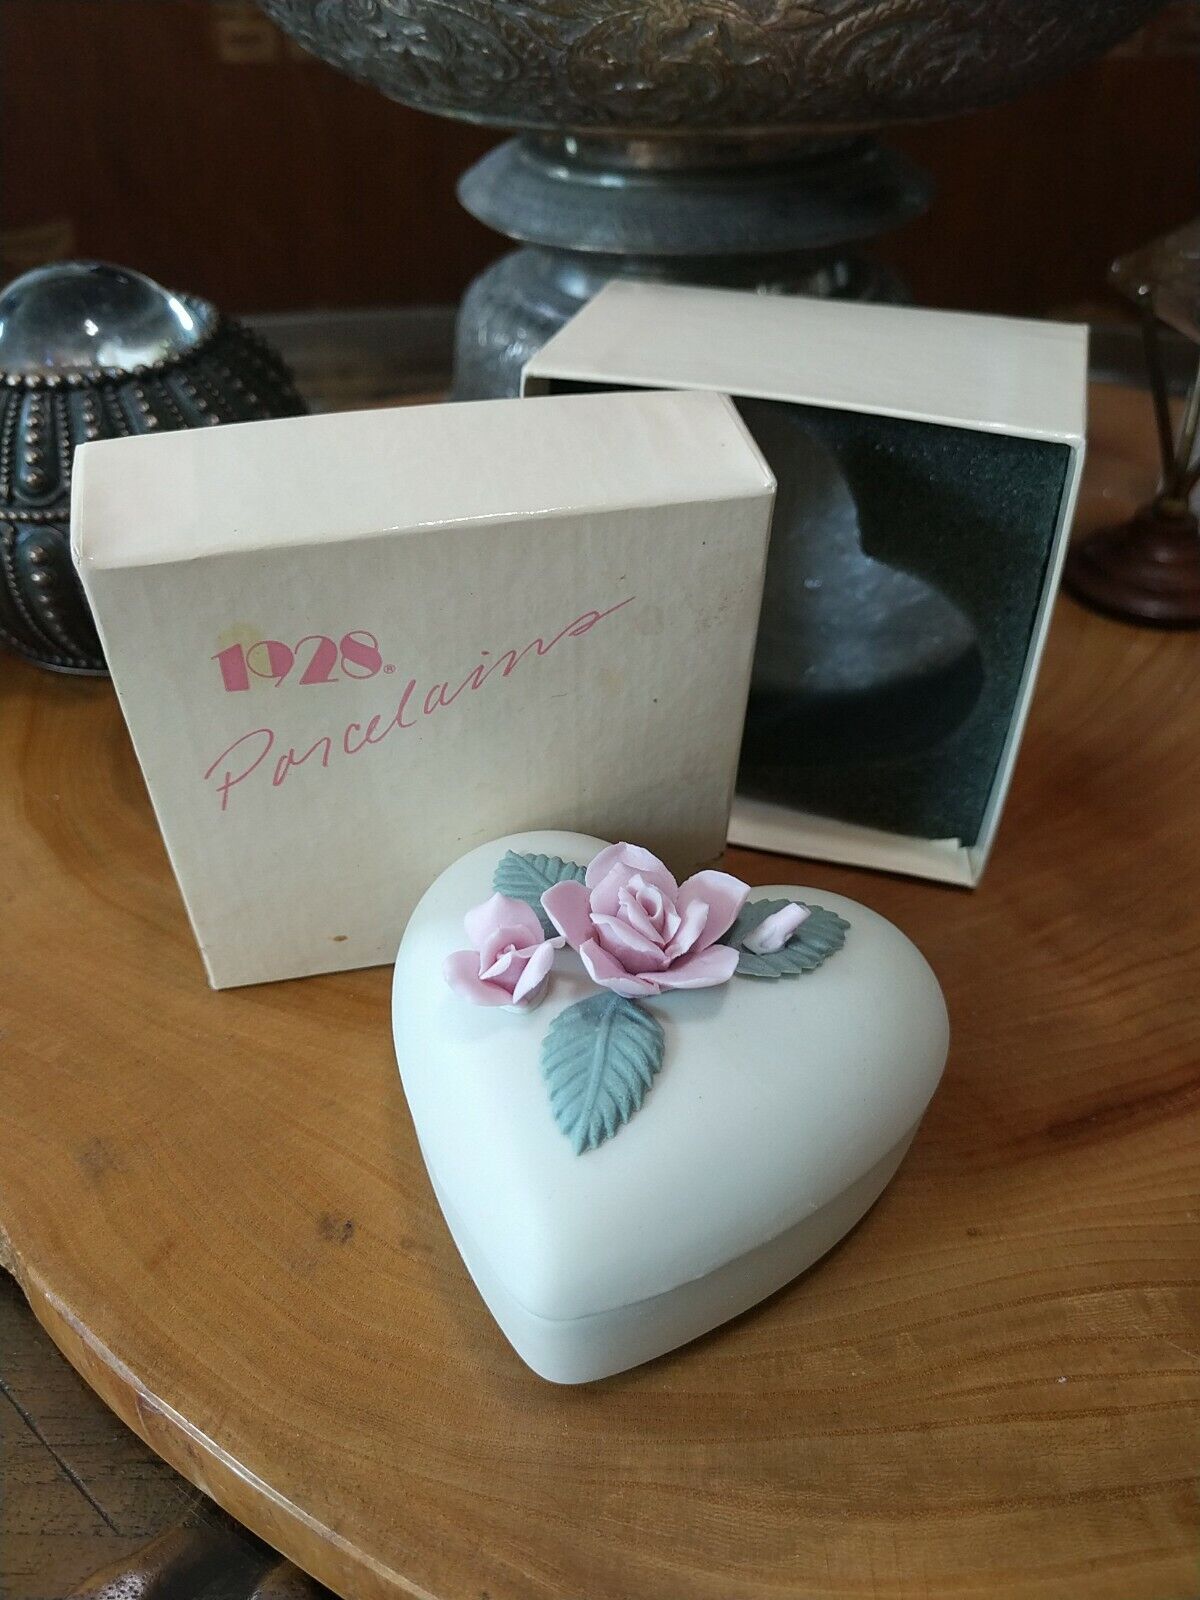 1928 Brand porcelain trinket box. Heart shape